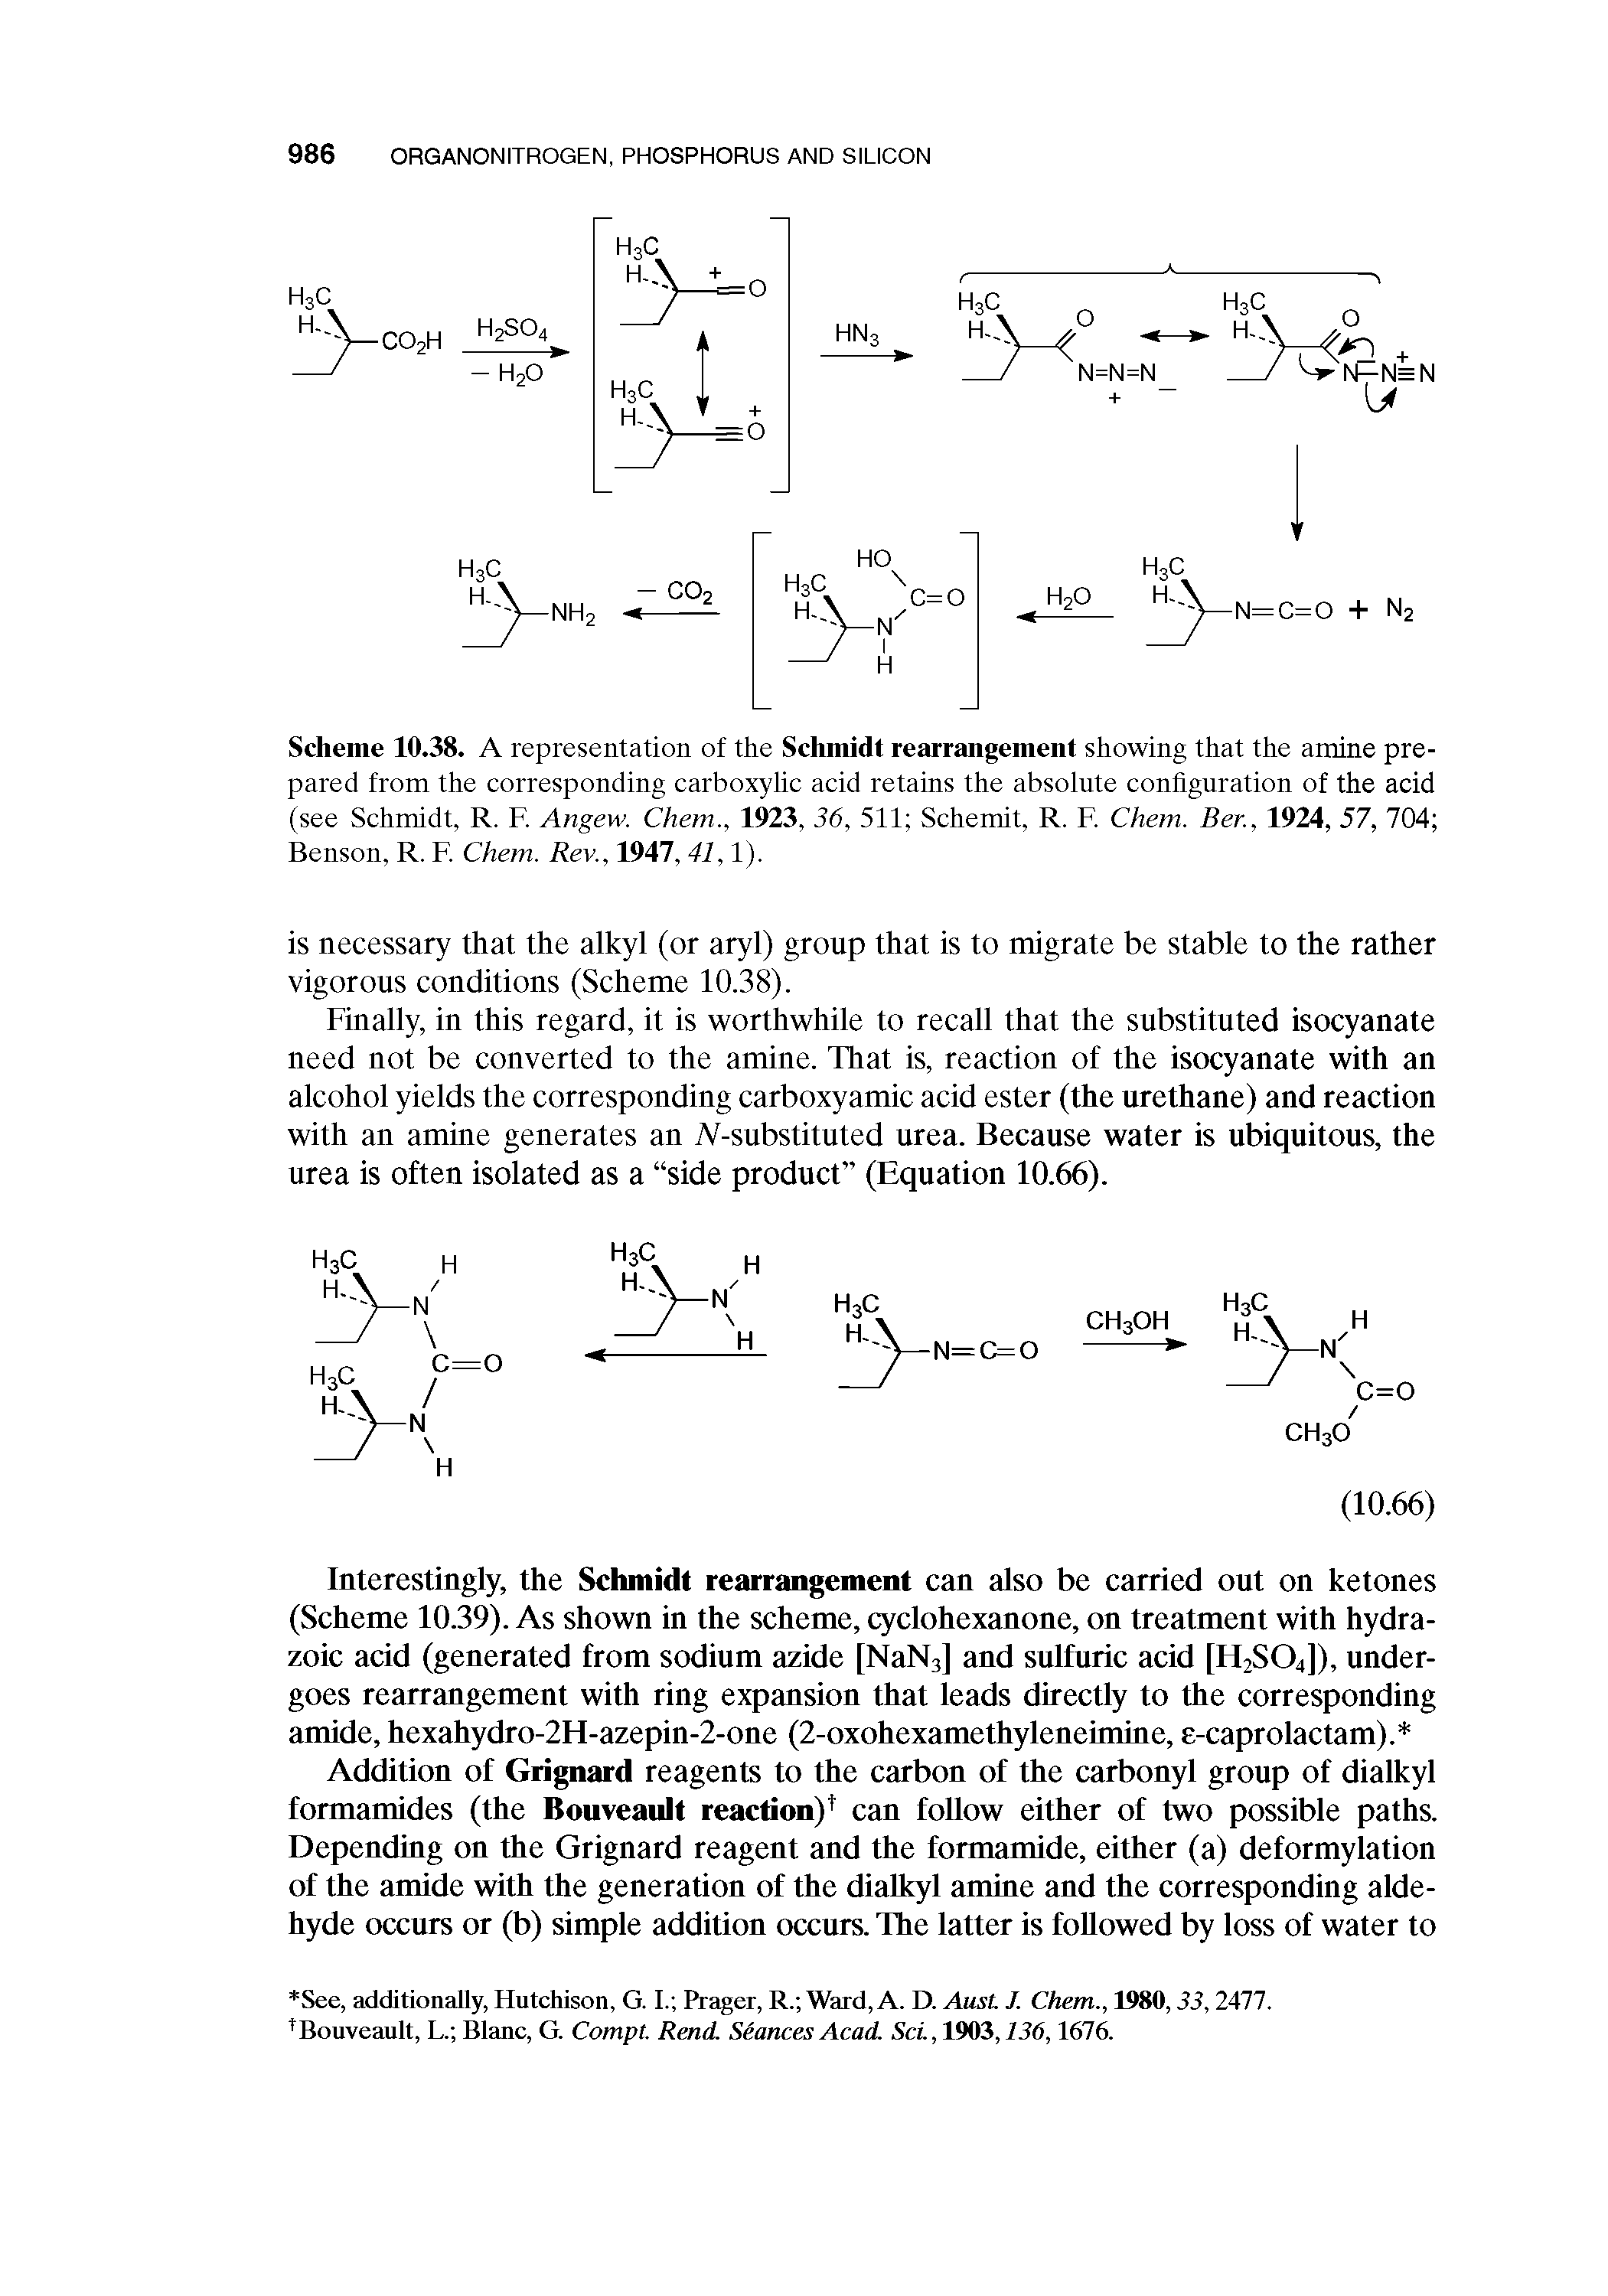 Scheme 10.38. A representation of the Schmidt rearrangement showing that the amine prepared from the corresponding carboxylic acid retains the absolute configuration of the acid (see Schmidt, R. F. Angew. Chem., 1923, 36, 511 Schemit, R. F. Chem. Ber., 1924, 57, 704 Benson, R. F. Chem. Rev., 1947, 41,1).